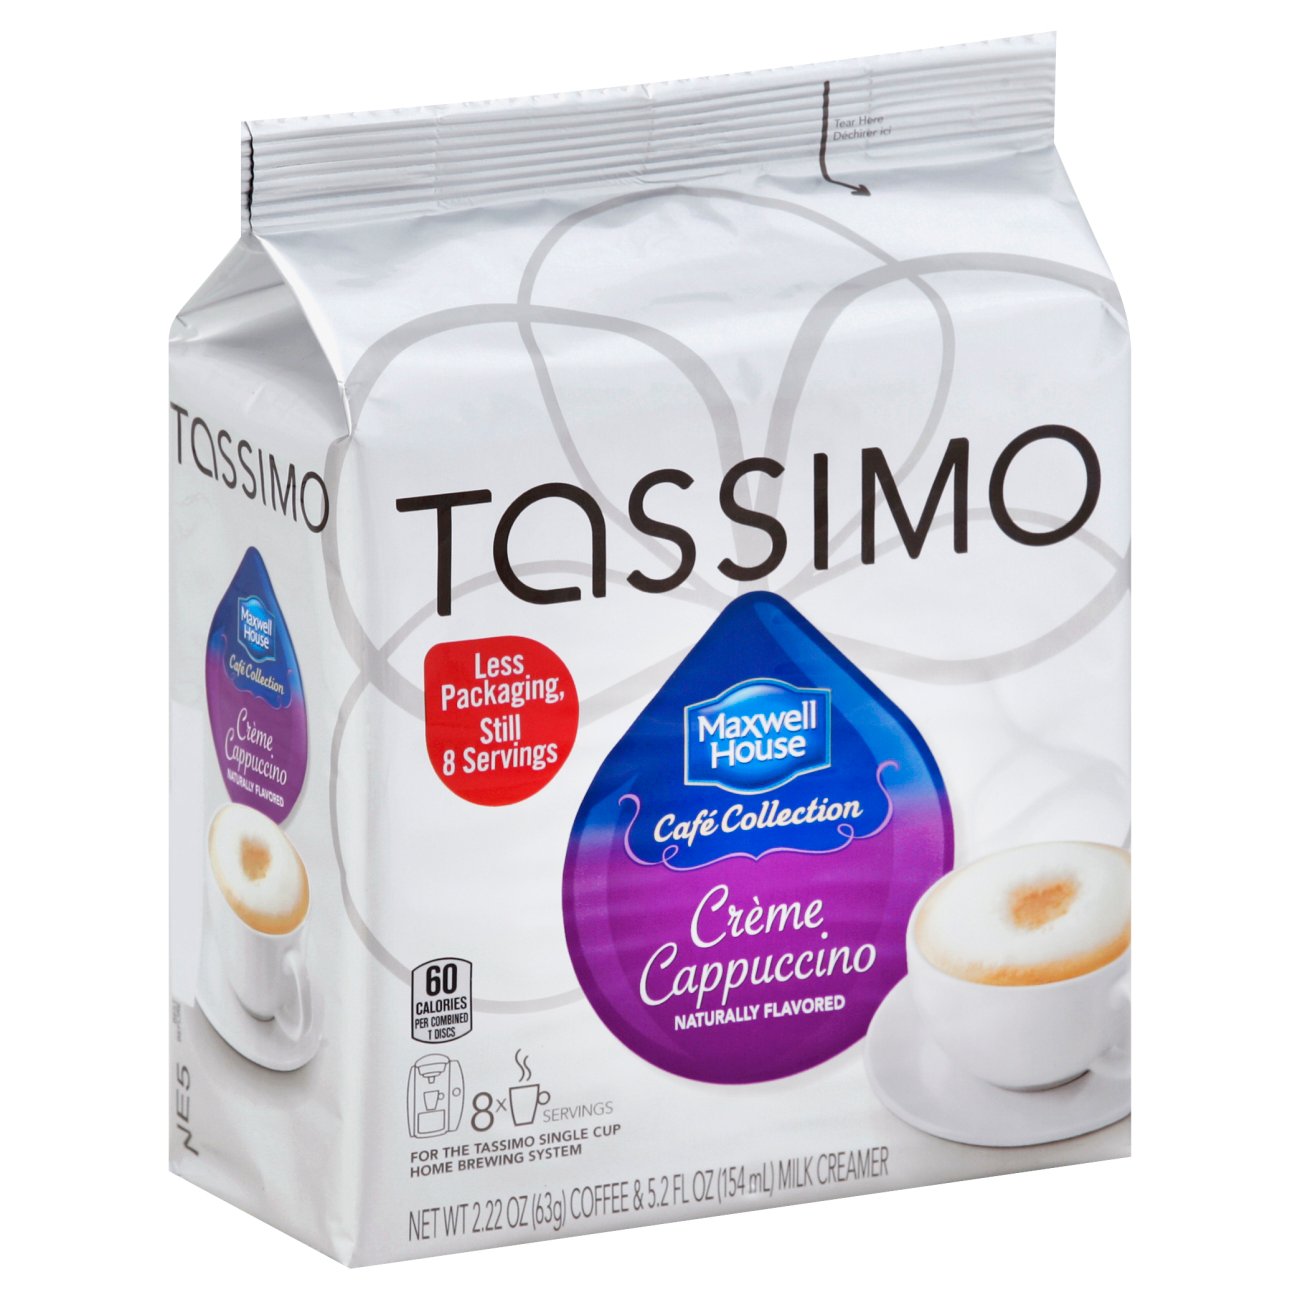 Tassimo Maxwell House Cafe Collection Creme Cappuccino Single